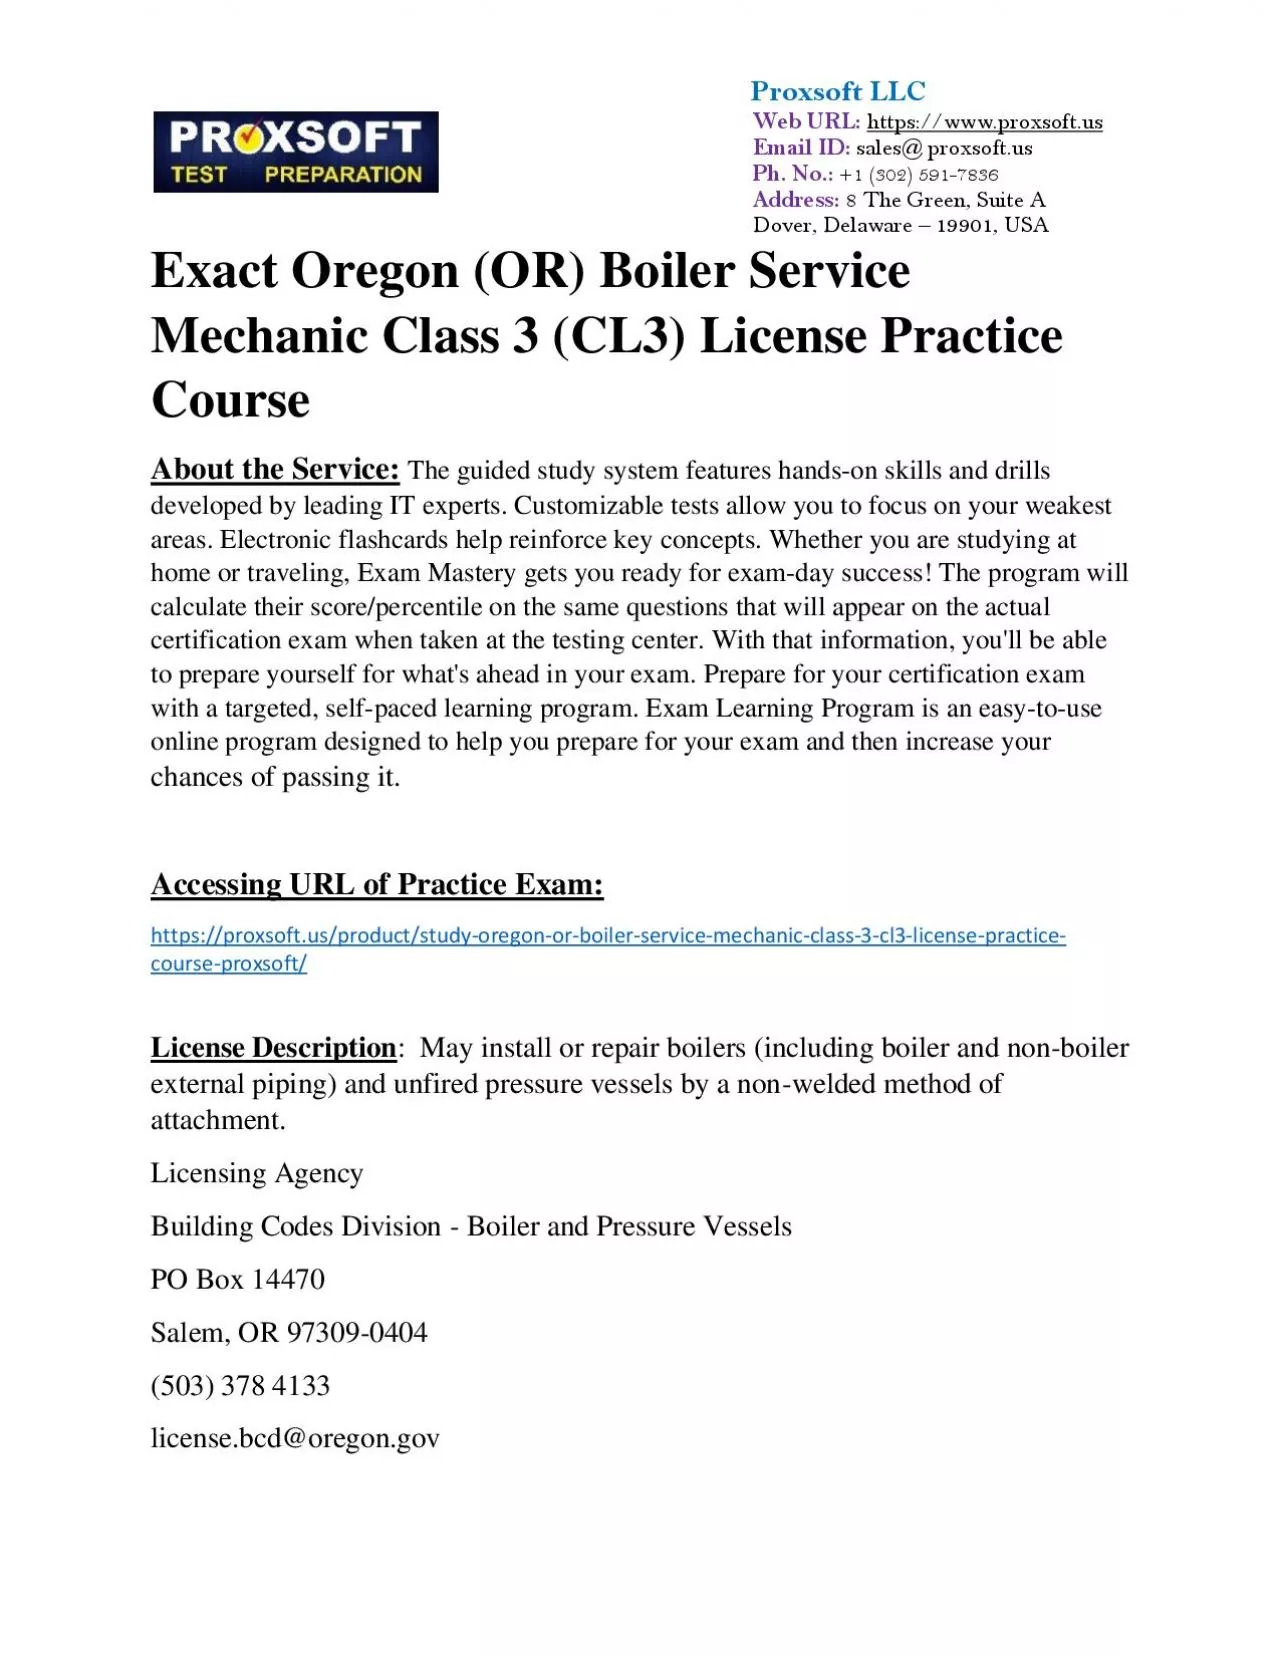 Exact Oregon (OR) Boiler Service Mechanic Class 3 (CL3) License Practice Course